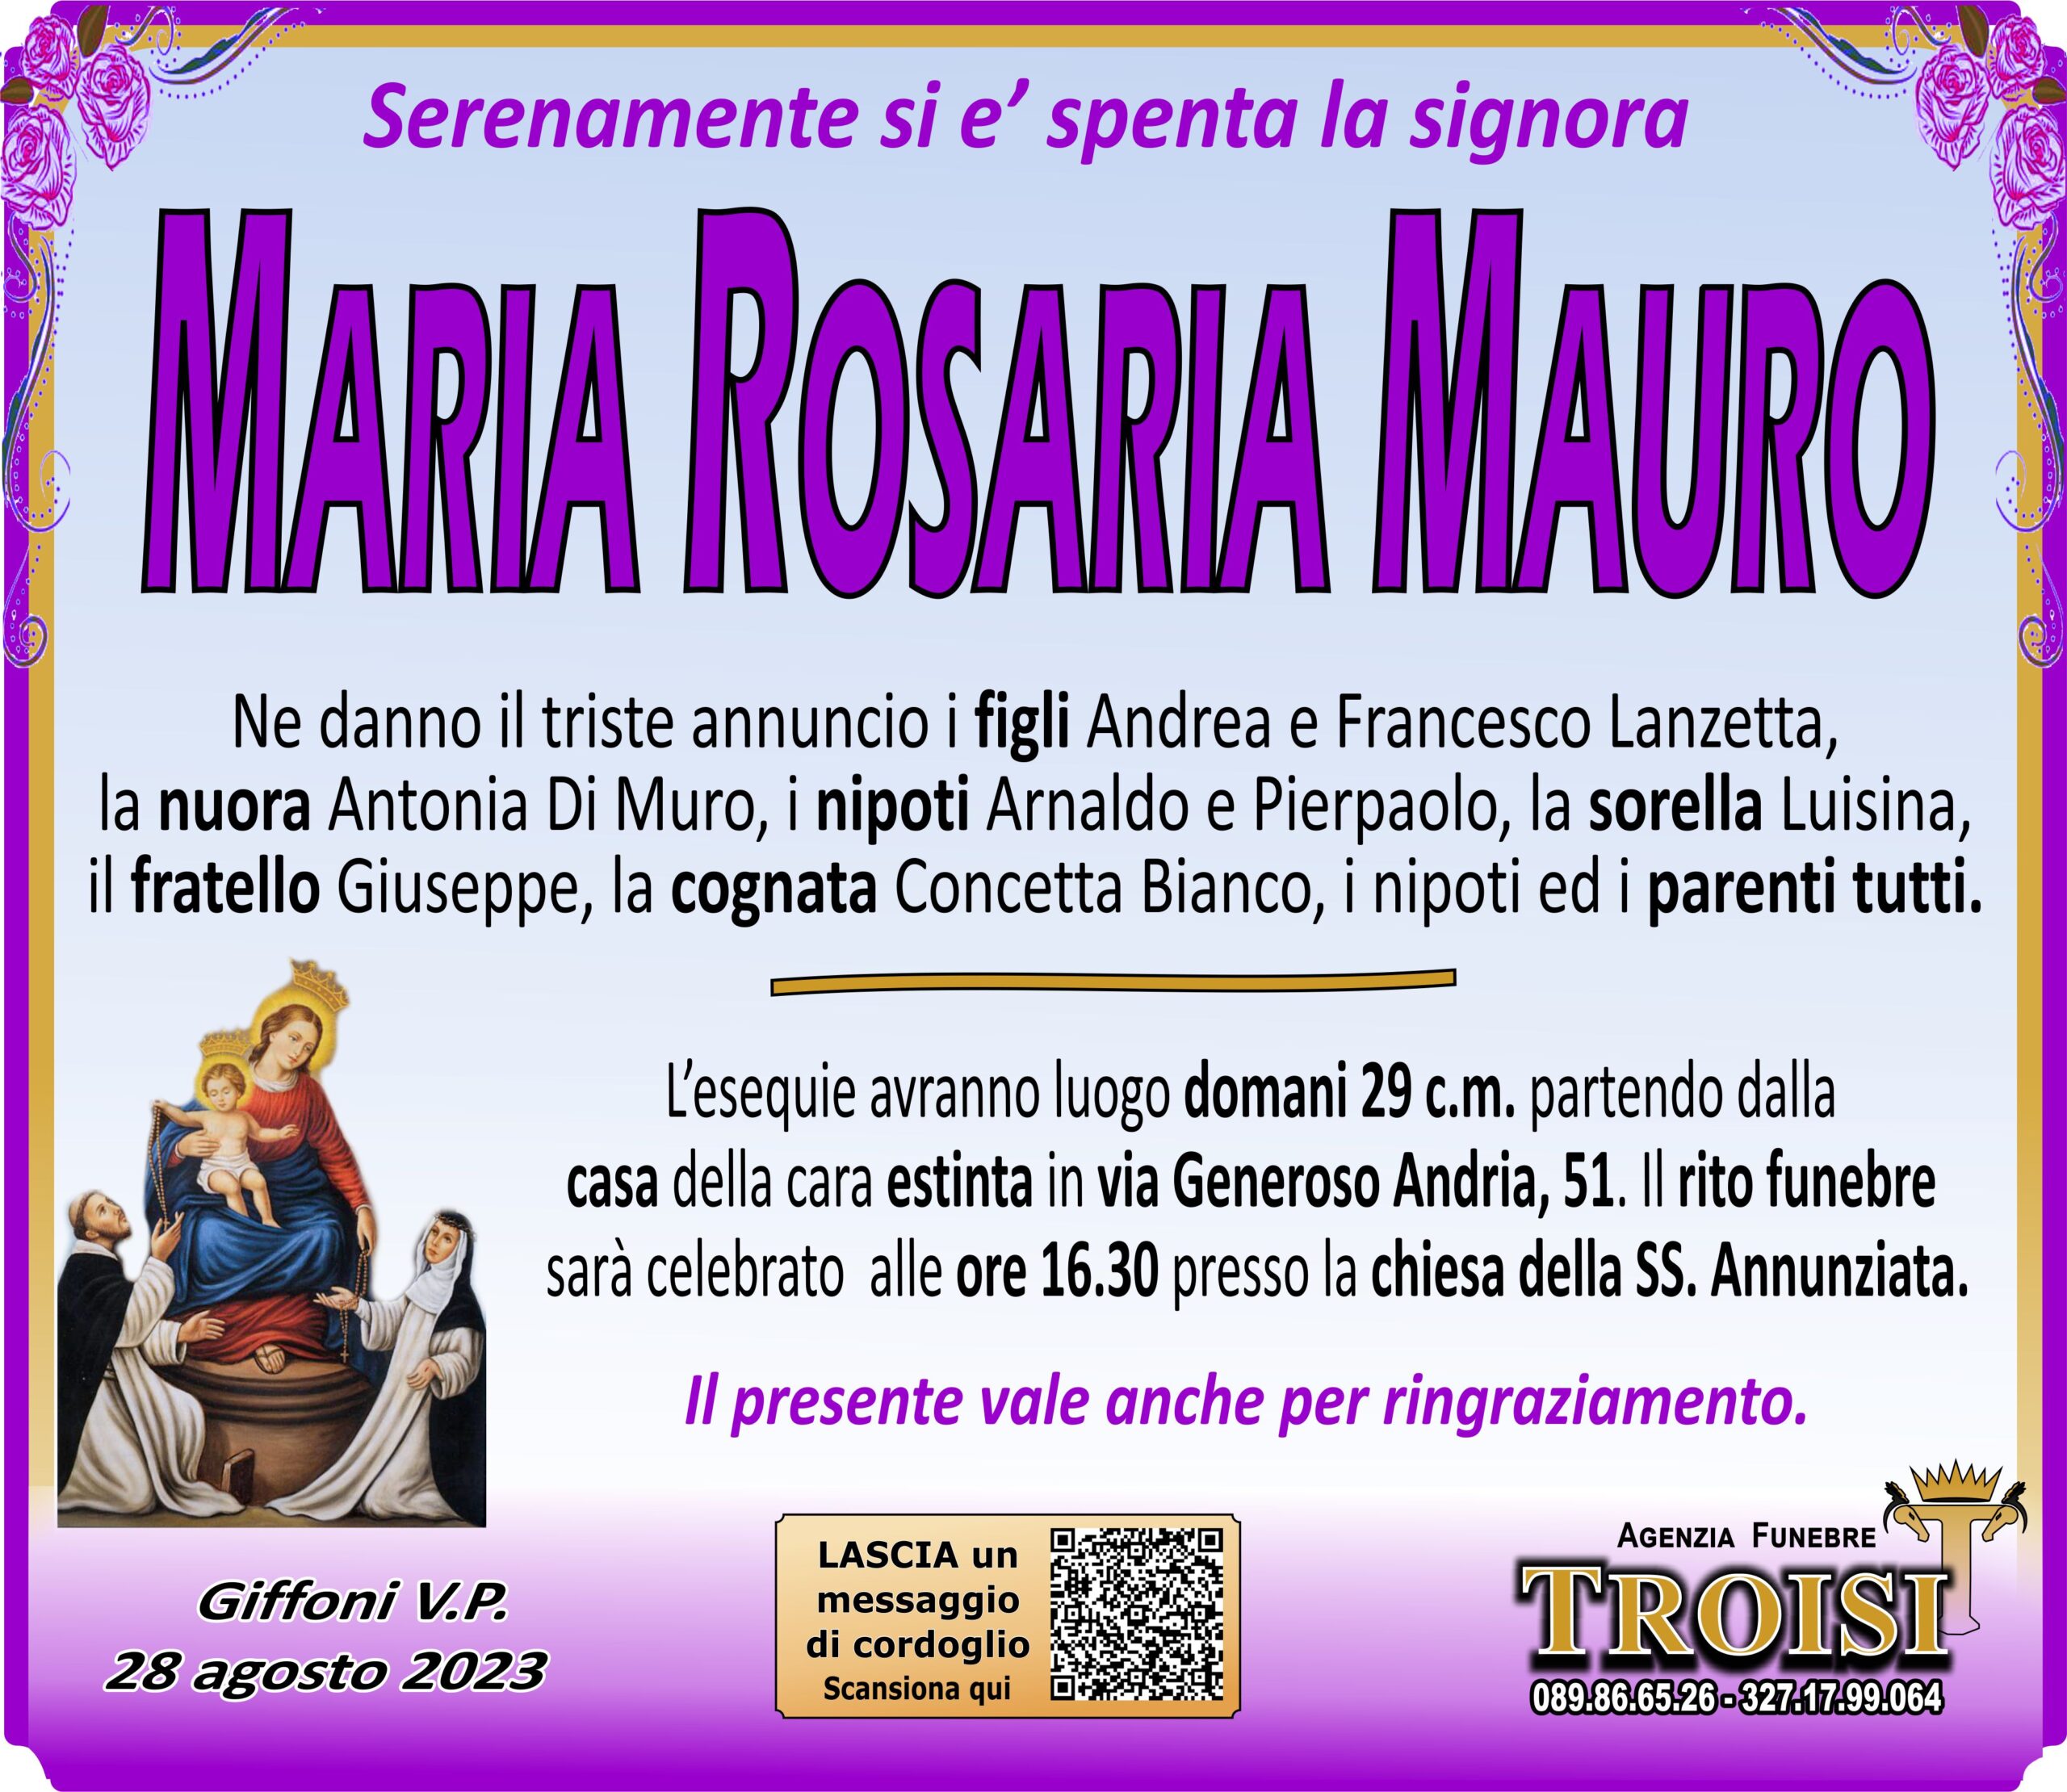 MARIA ROSARIA MAURO